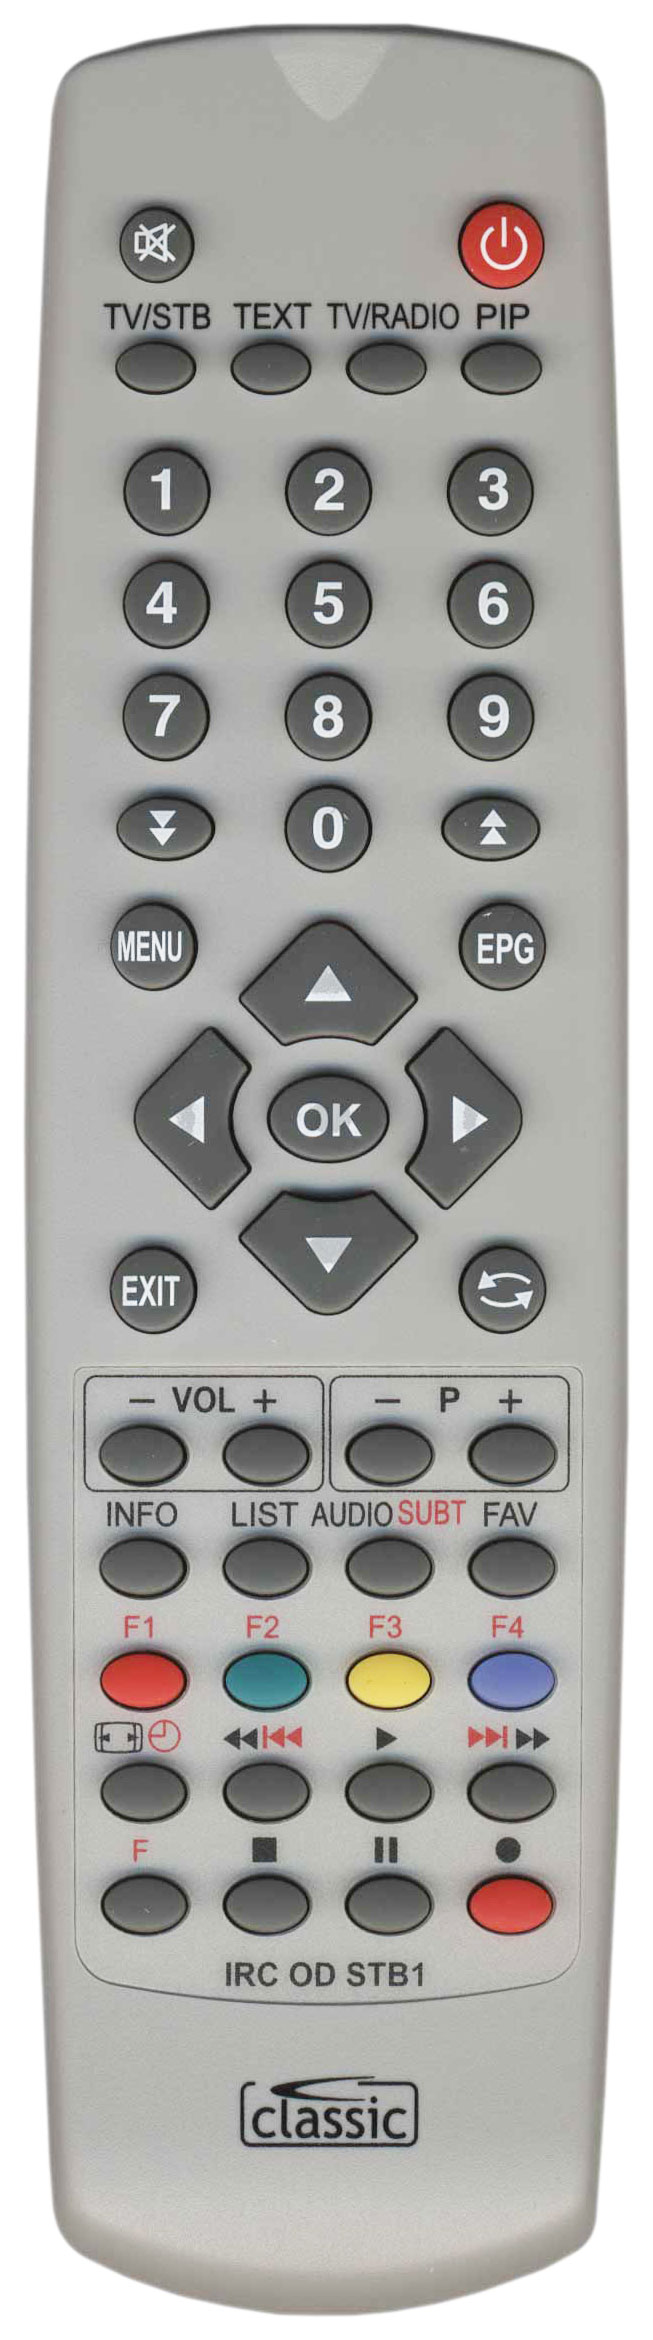 TECHNOMATE TM5000 Replacement Remote Control